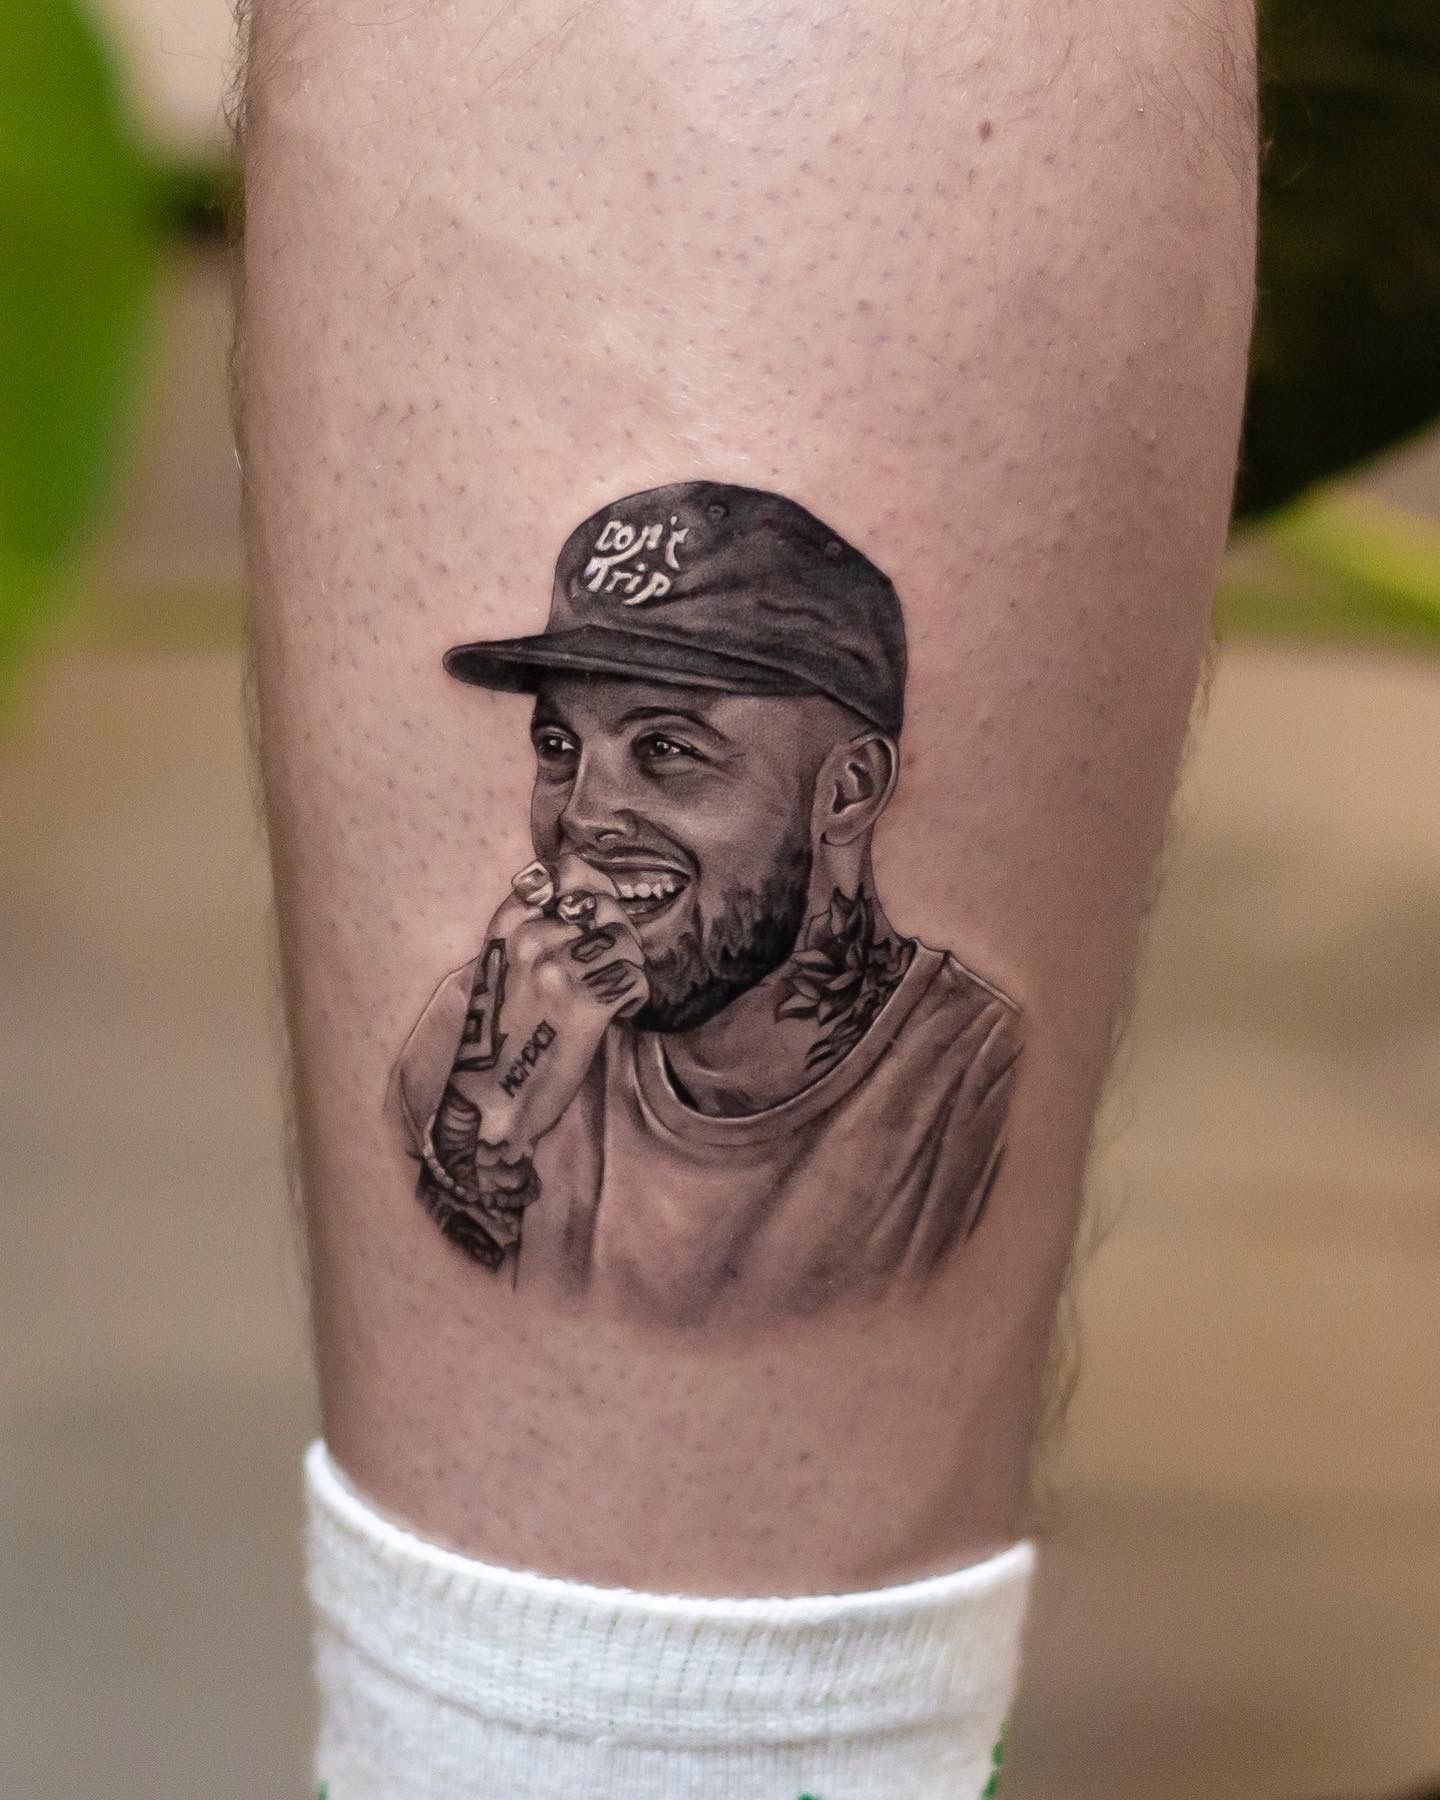 Micro-realist Mac Miller tattoo on inner forearm